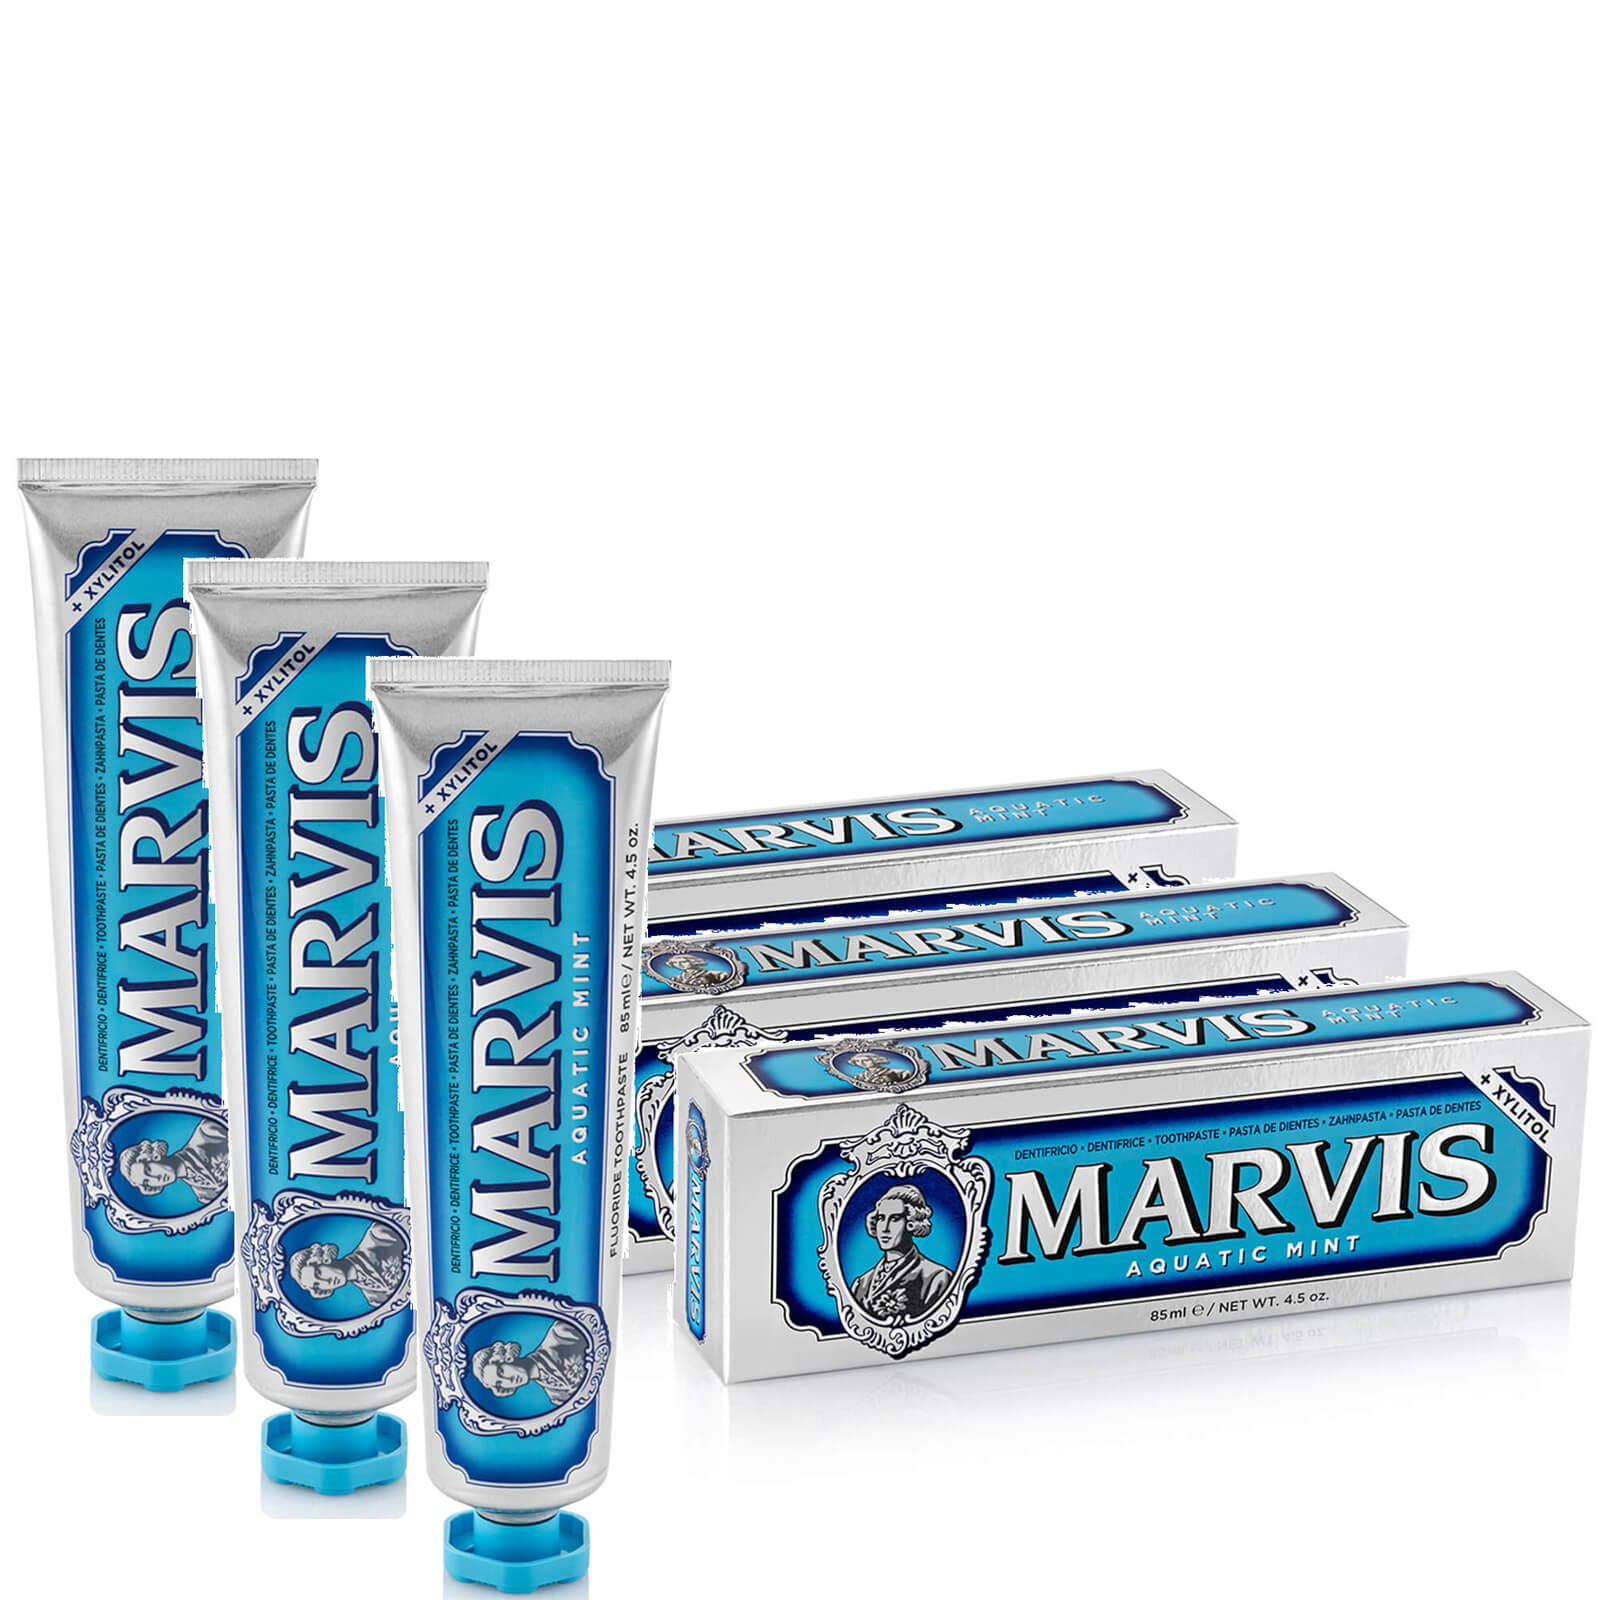 Marvis Aquatic Mint Toothpaste Trio lookfantastic.com imagine